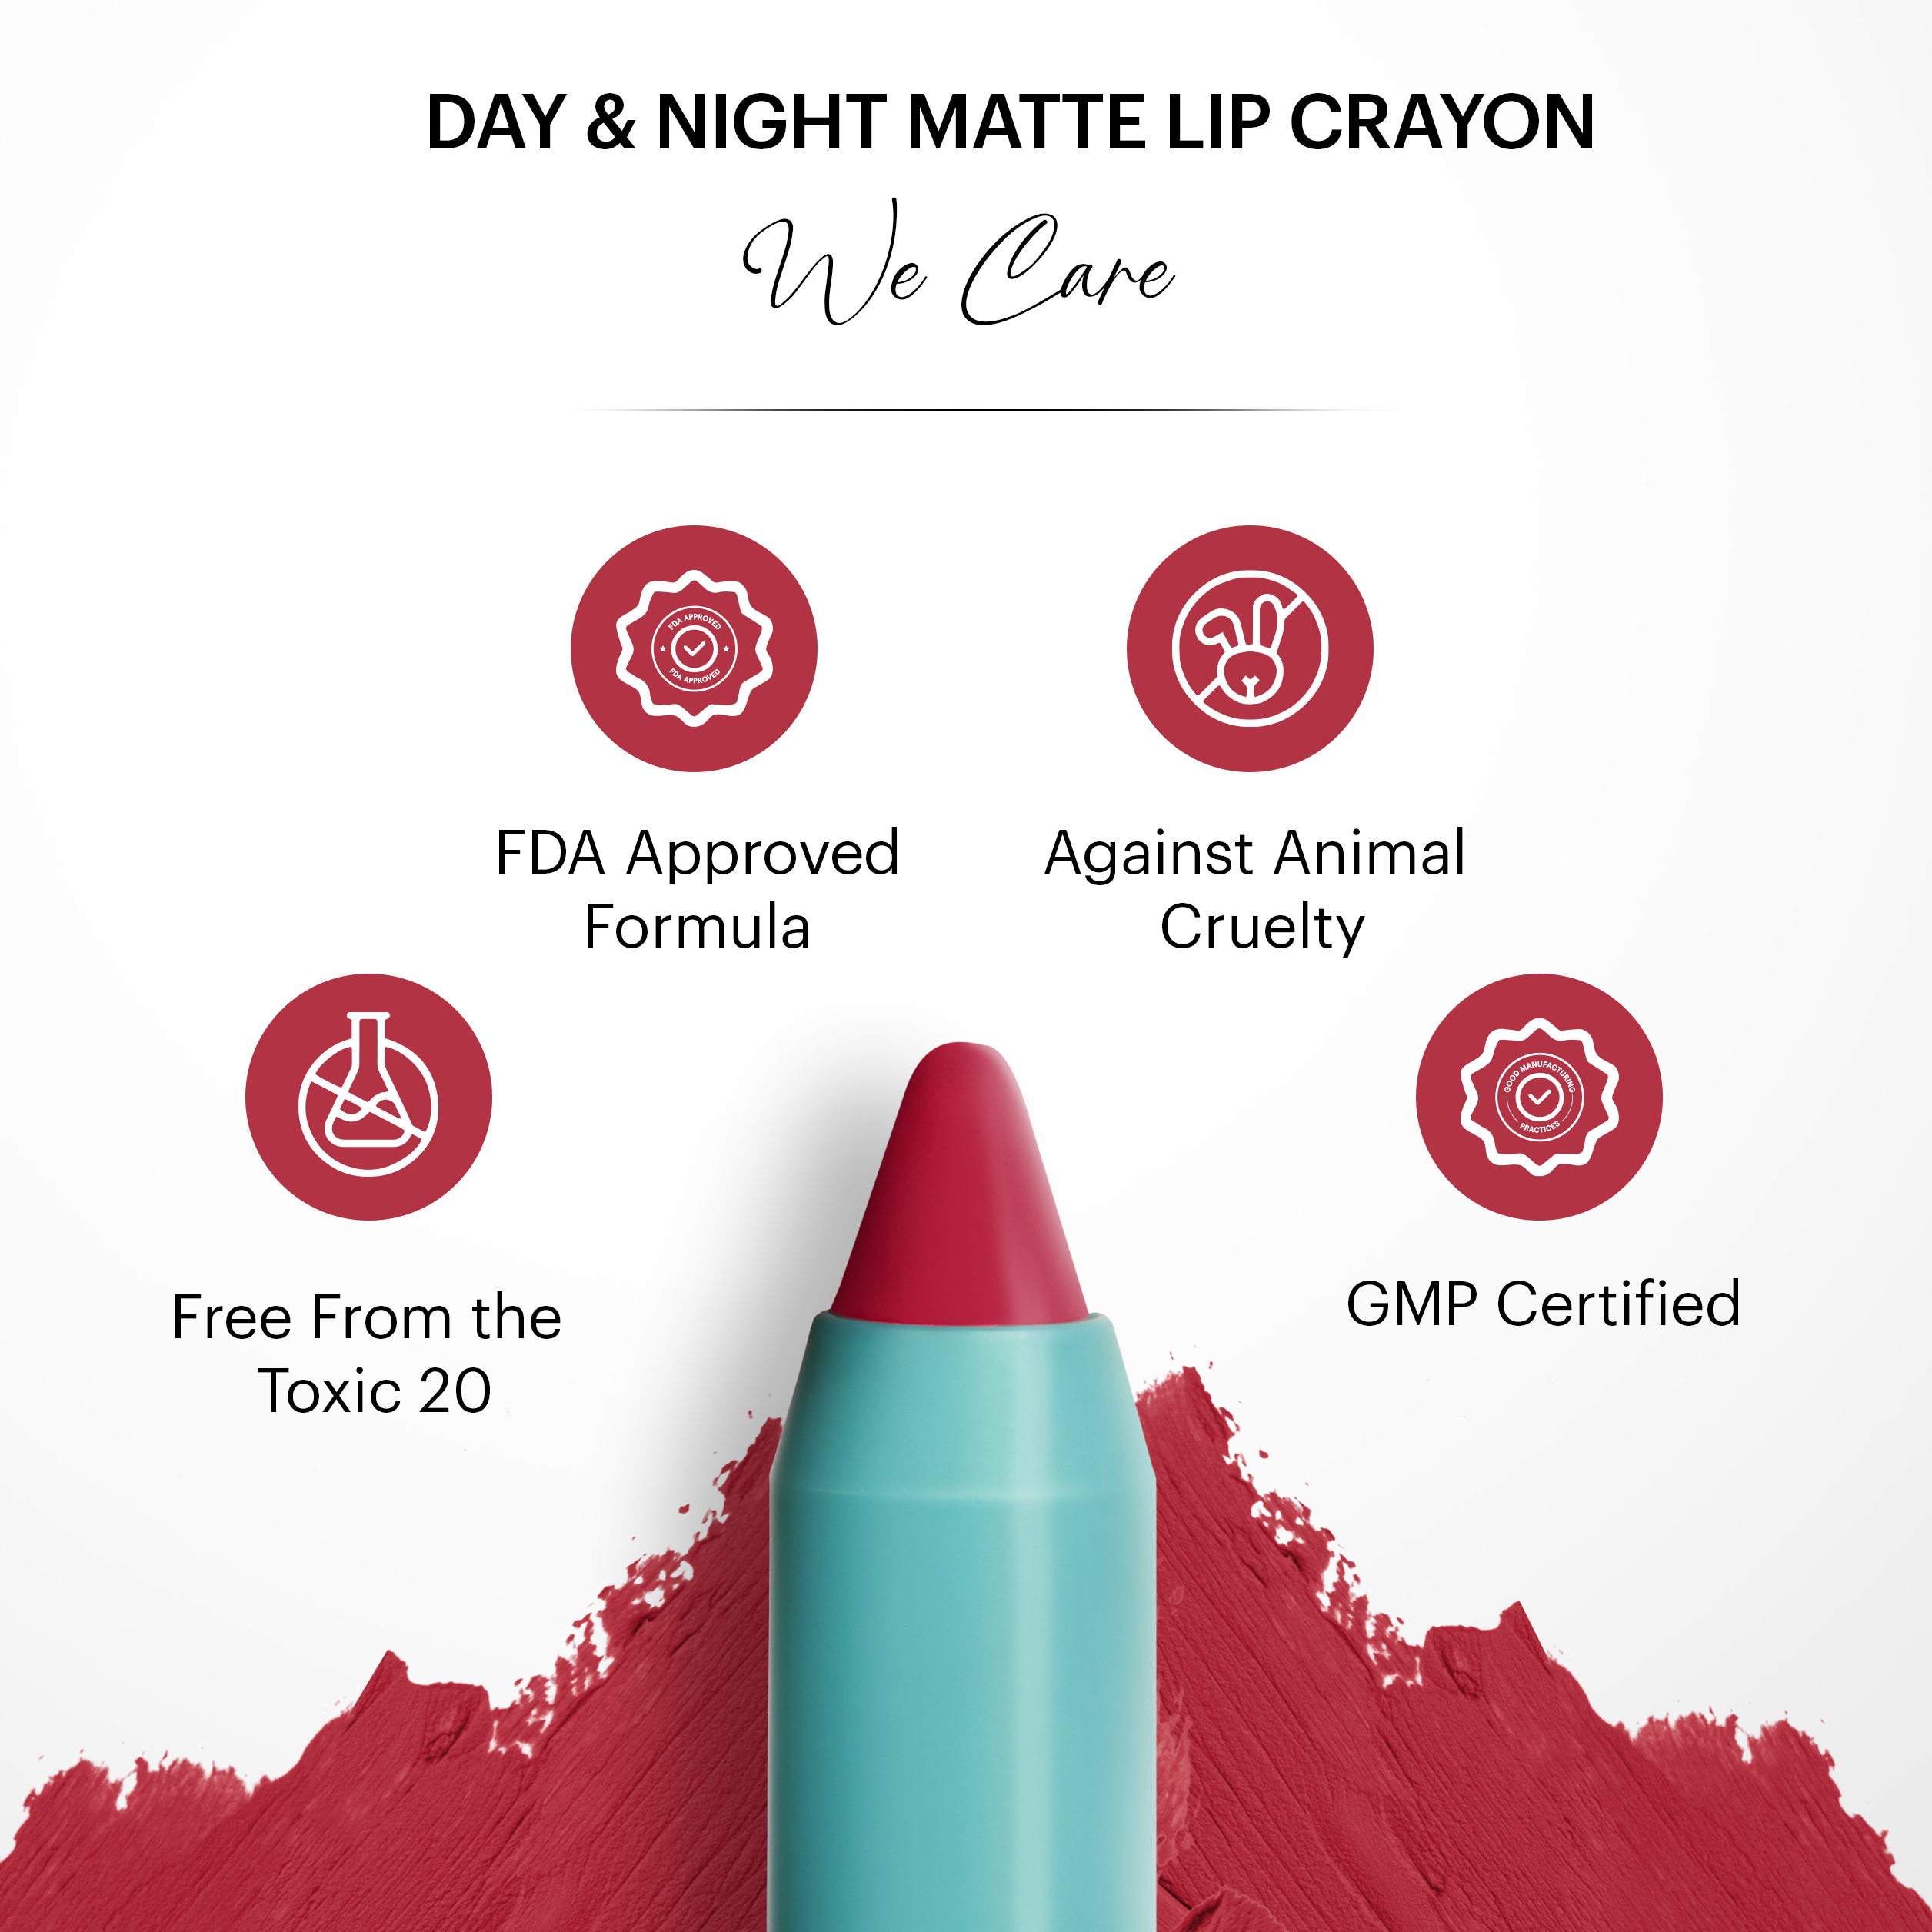 Day & Night Matte Lip Crayon Shade: Socialite 67